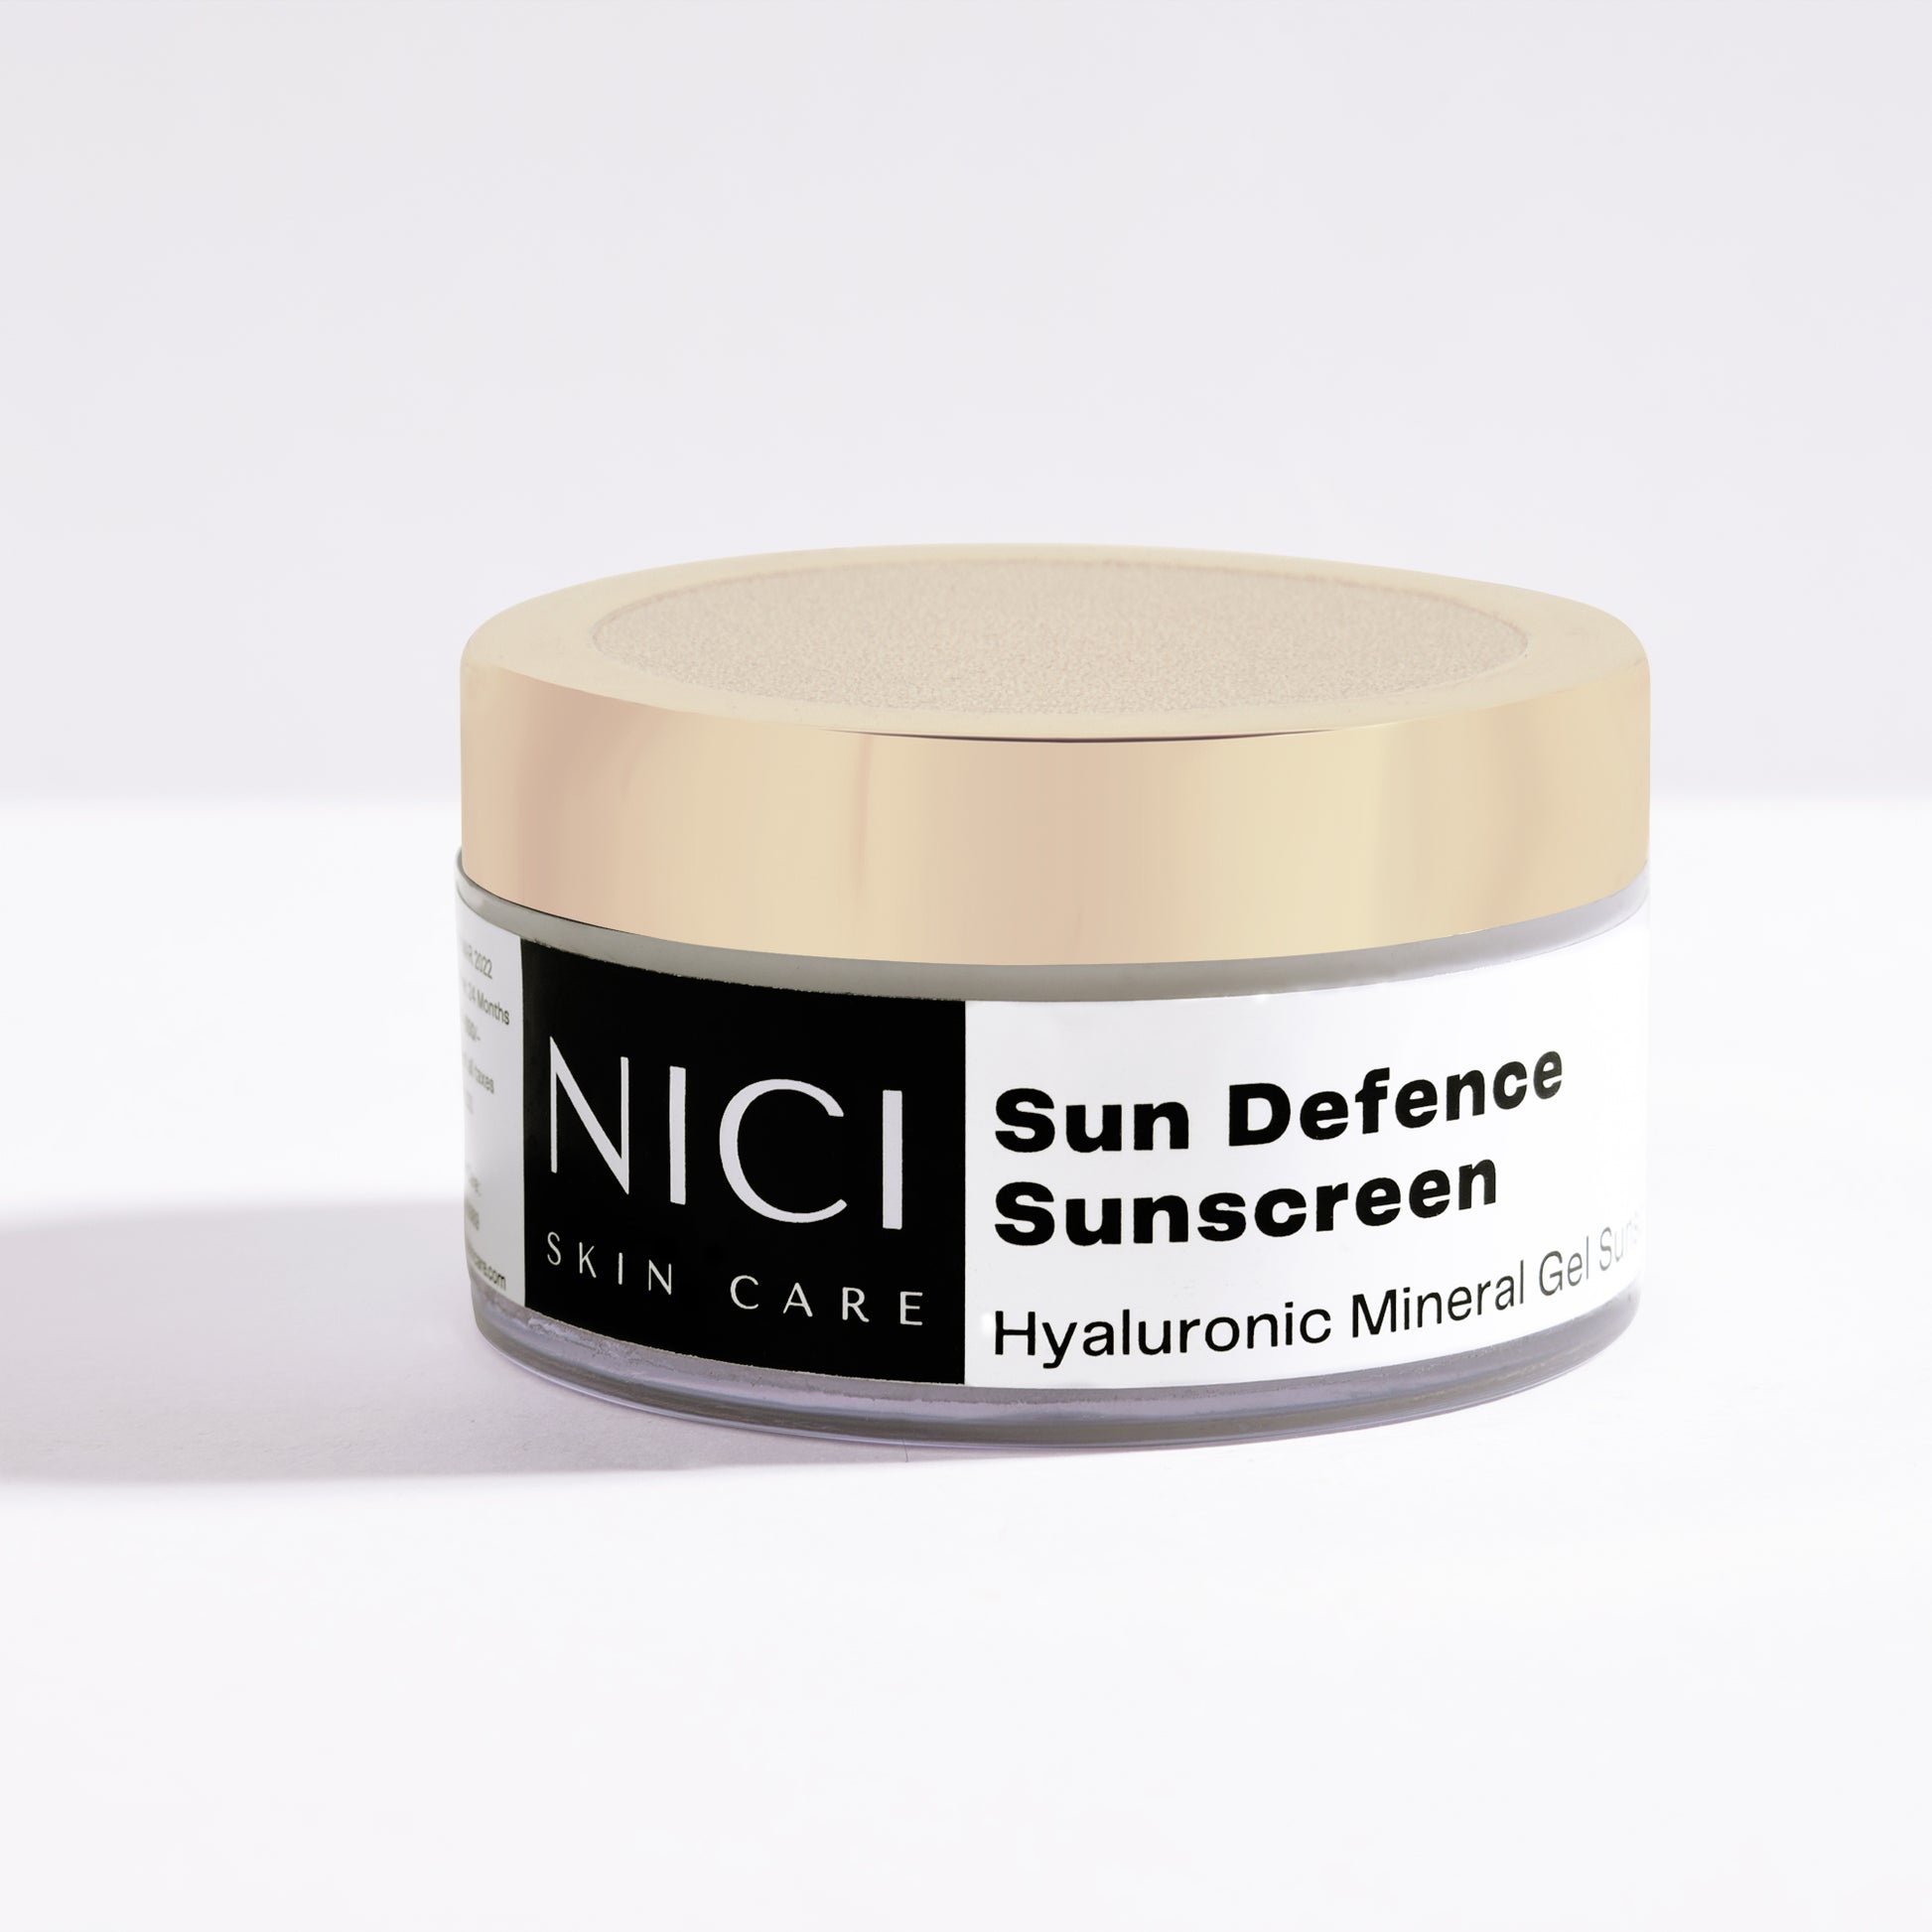 Sun Defence Sunscreen Nici Skin Care